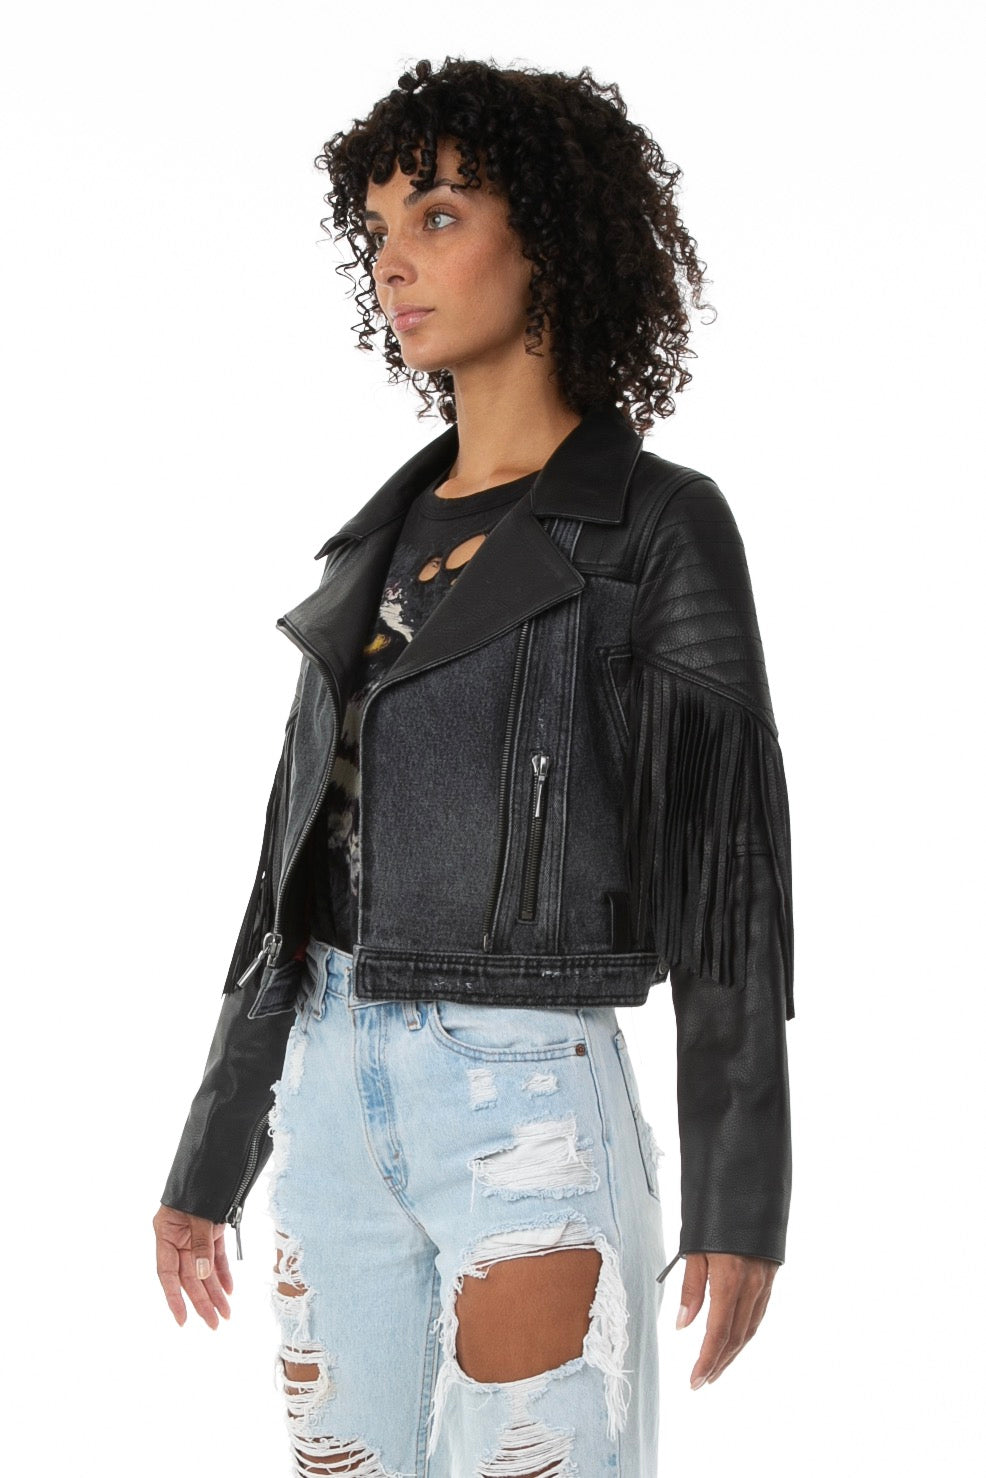 Side of female model wearing La Matadora leather jacket